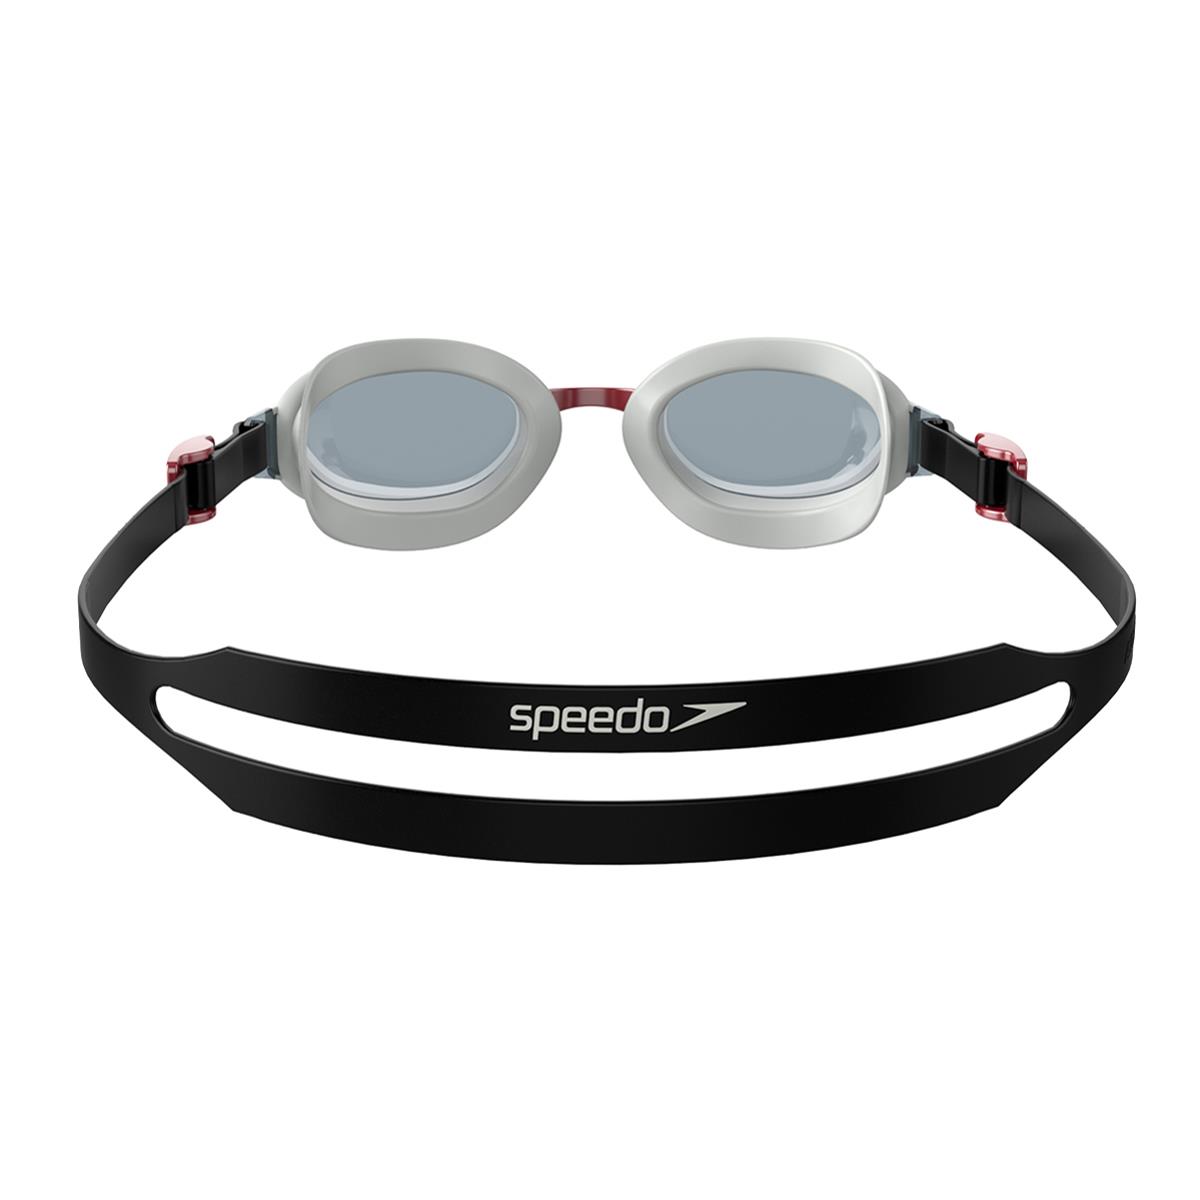 Speedo Aquapure Goggles - Black/ White/ Red/ Smoke